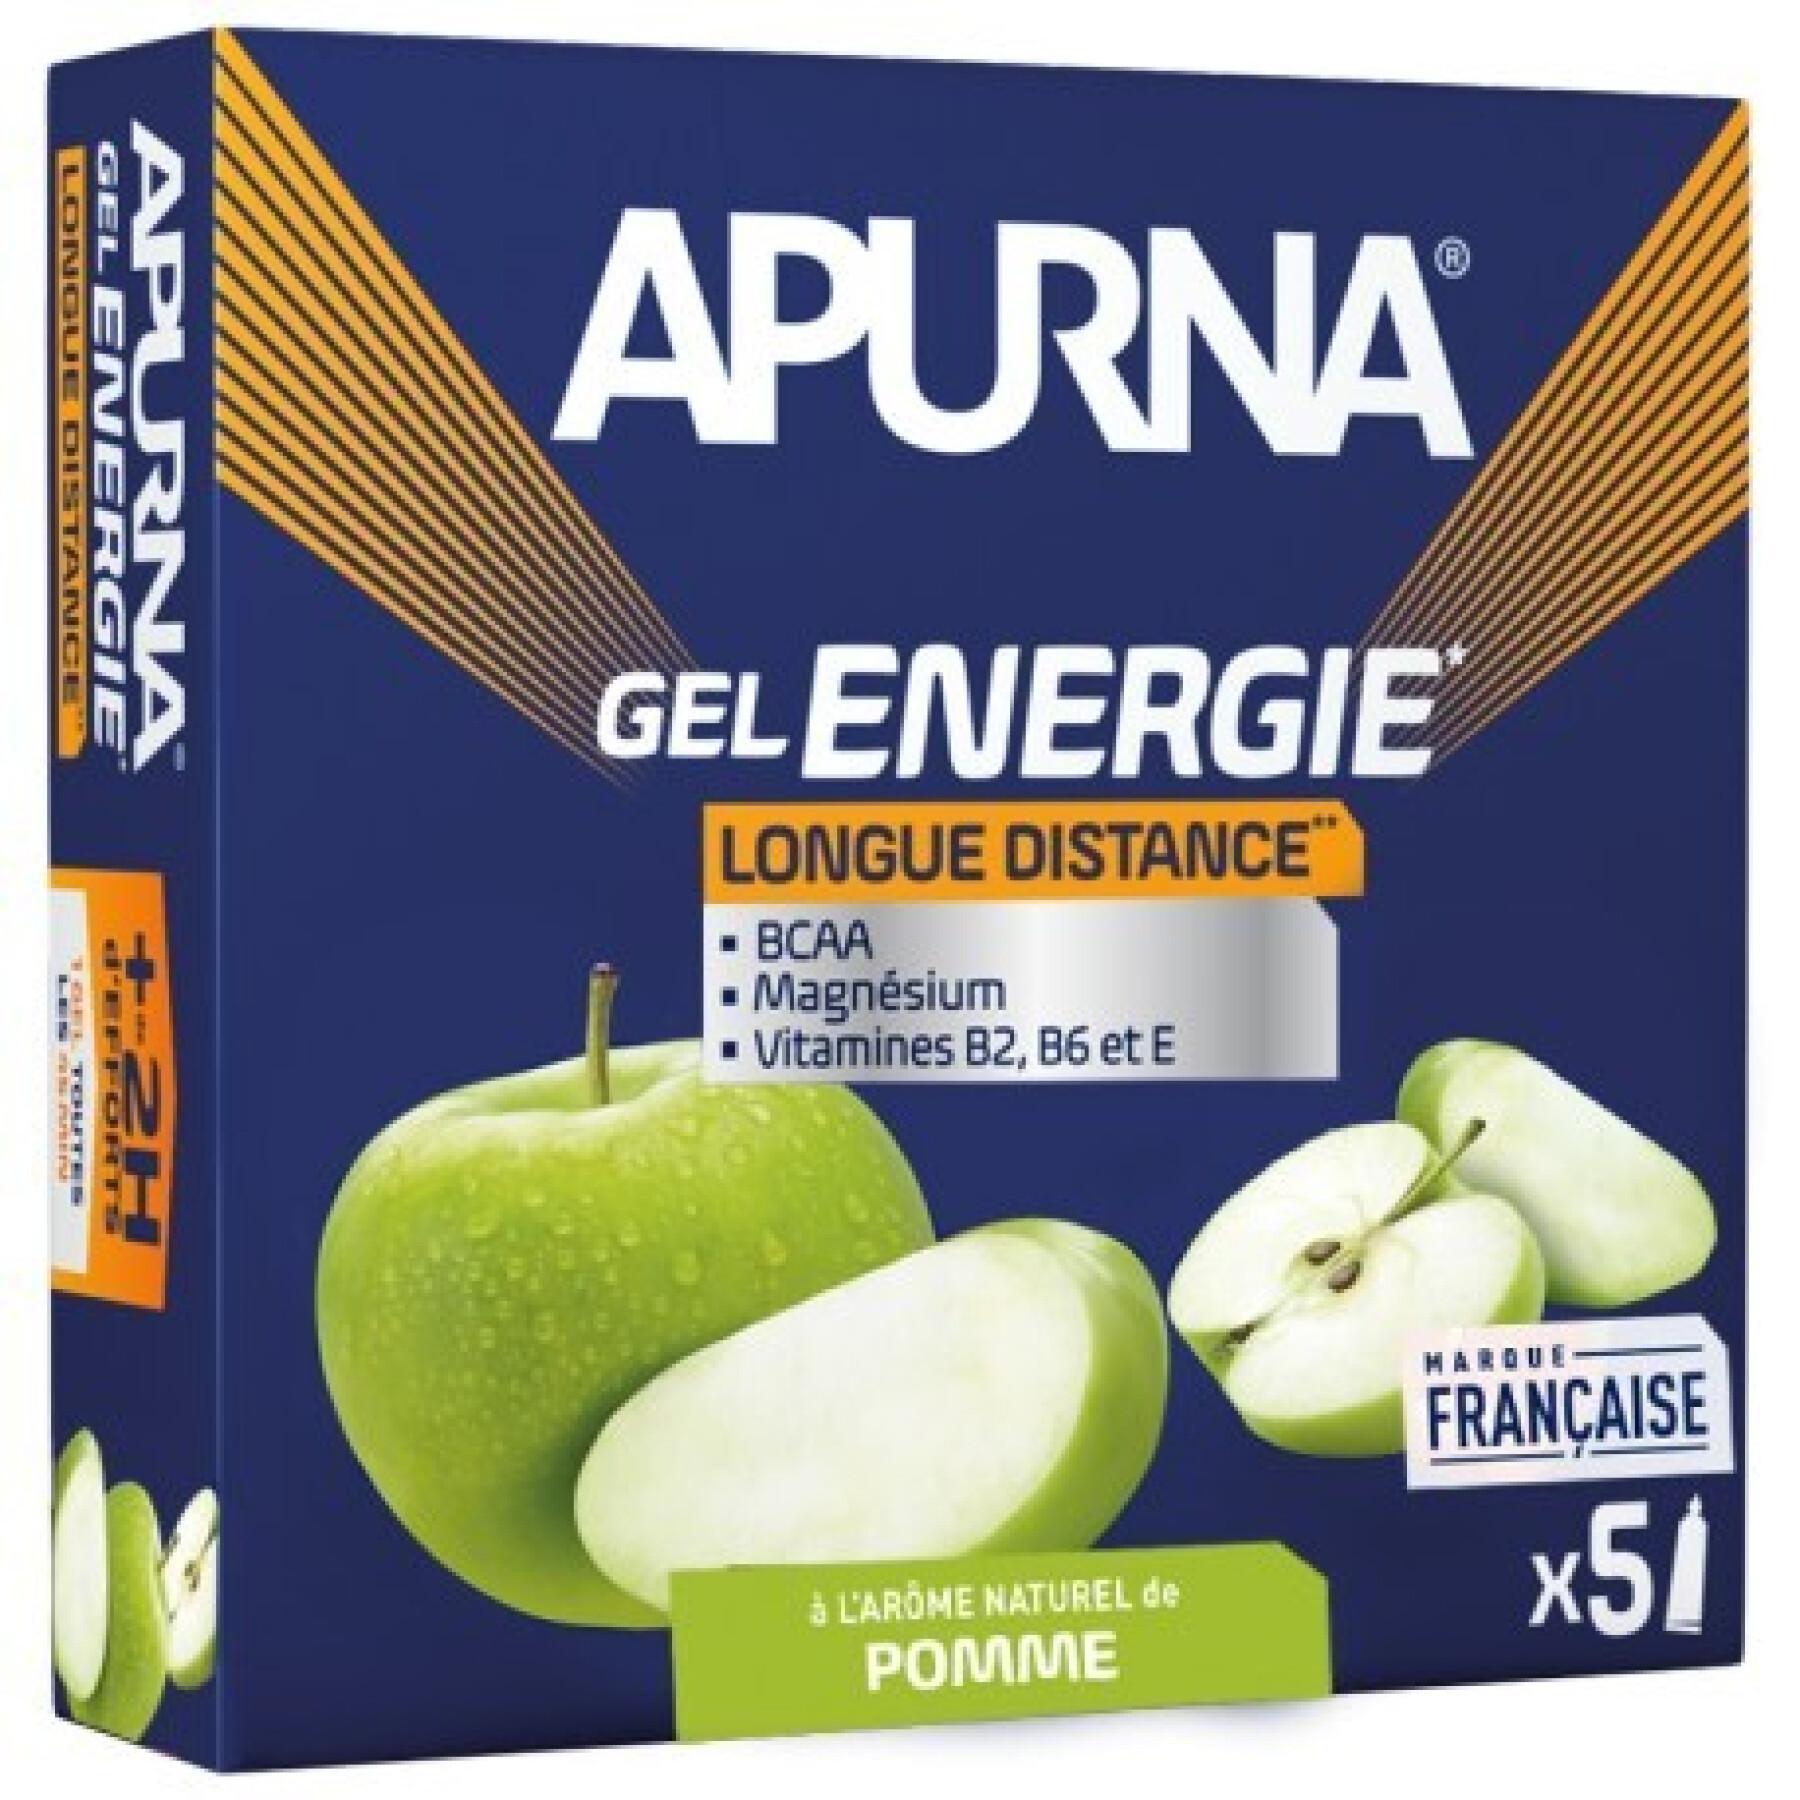 5 long distance energy gels green apple +2h effort Apurna